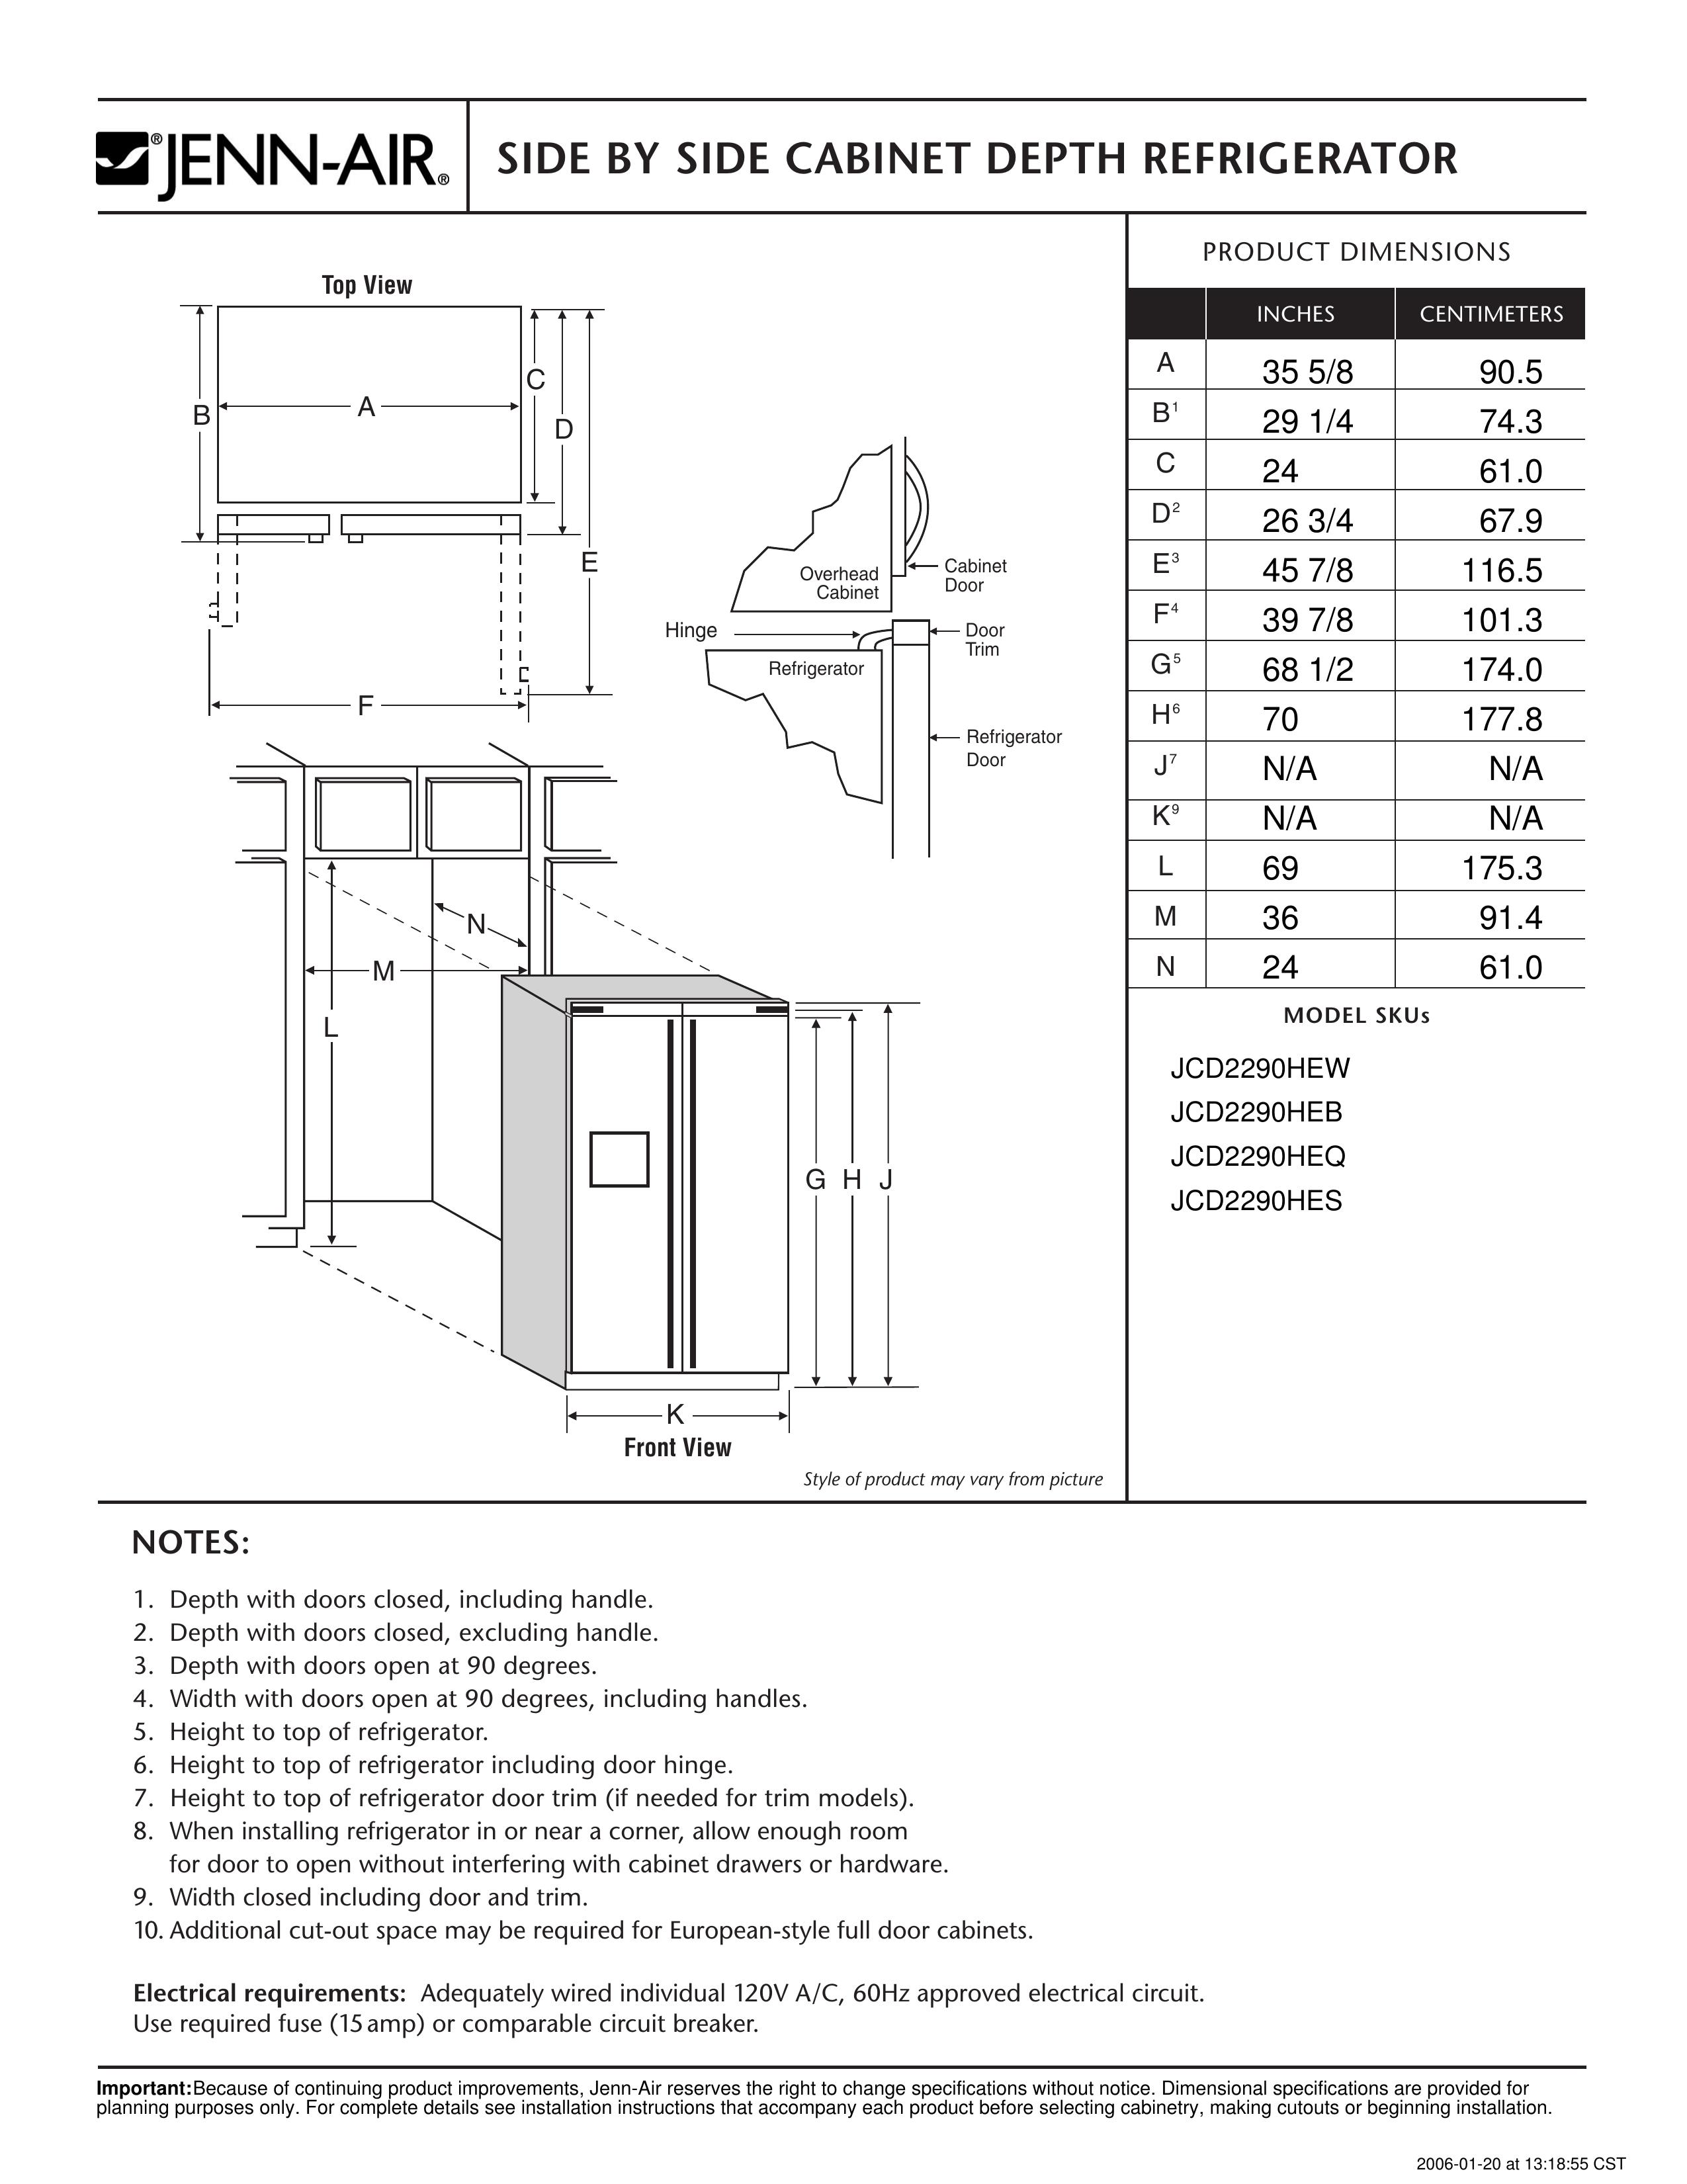 Jenn-Air JCD2290HEQ Refrigerator User Manual